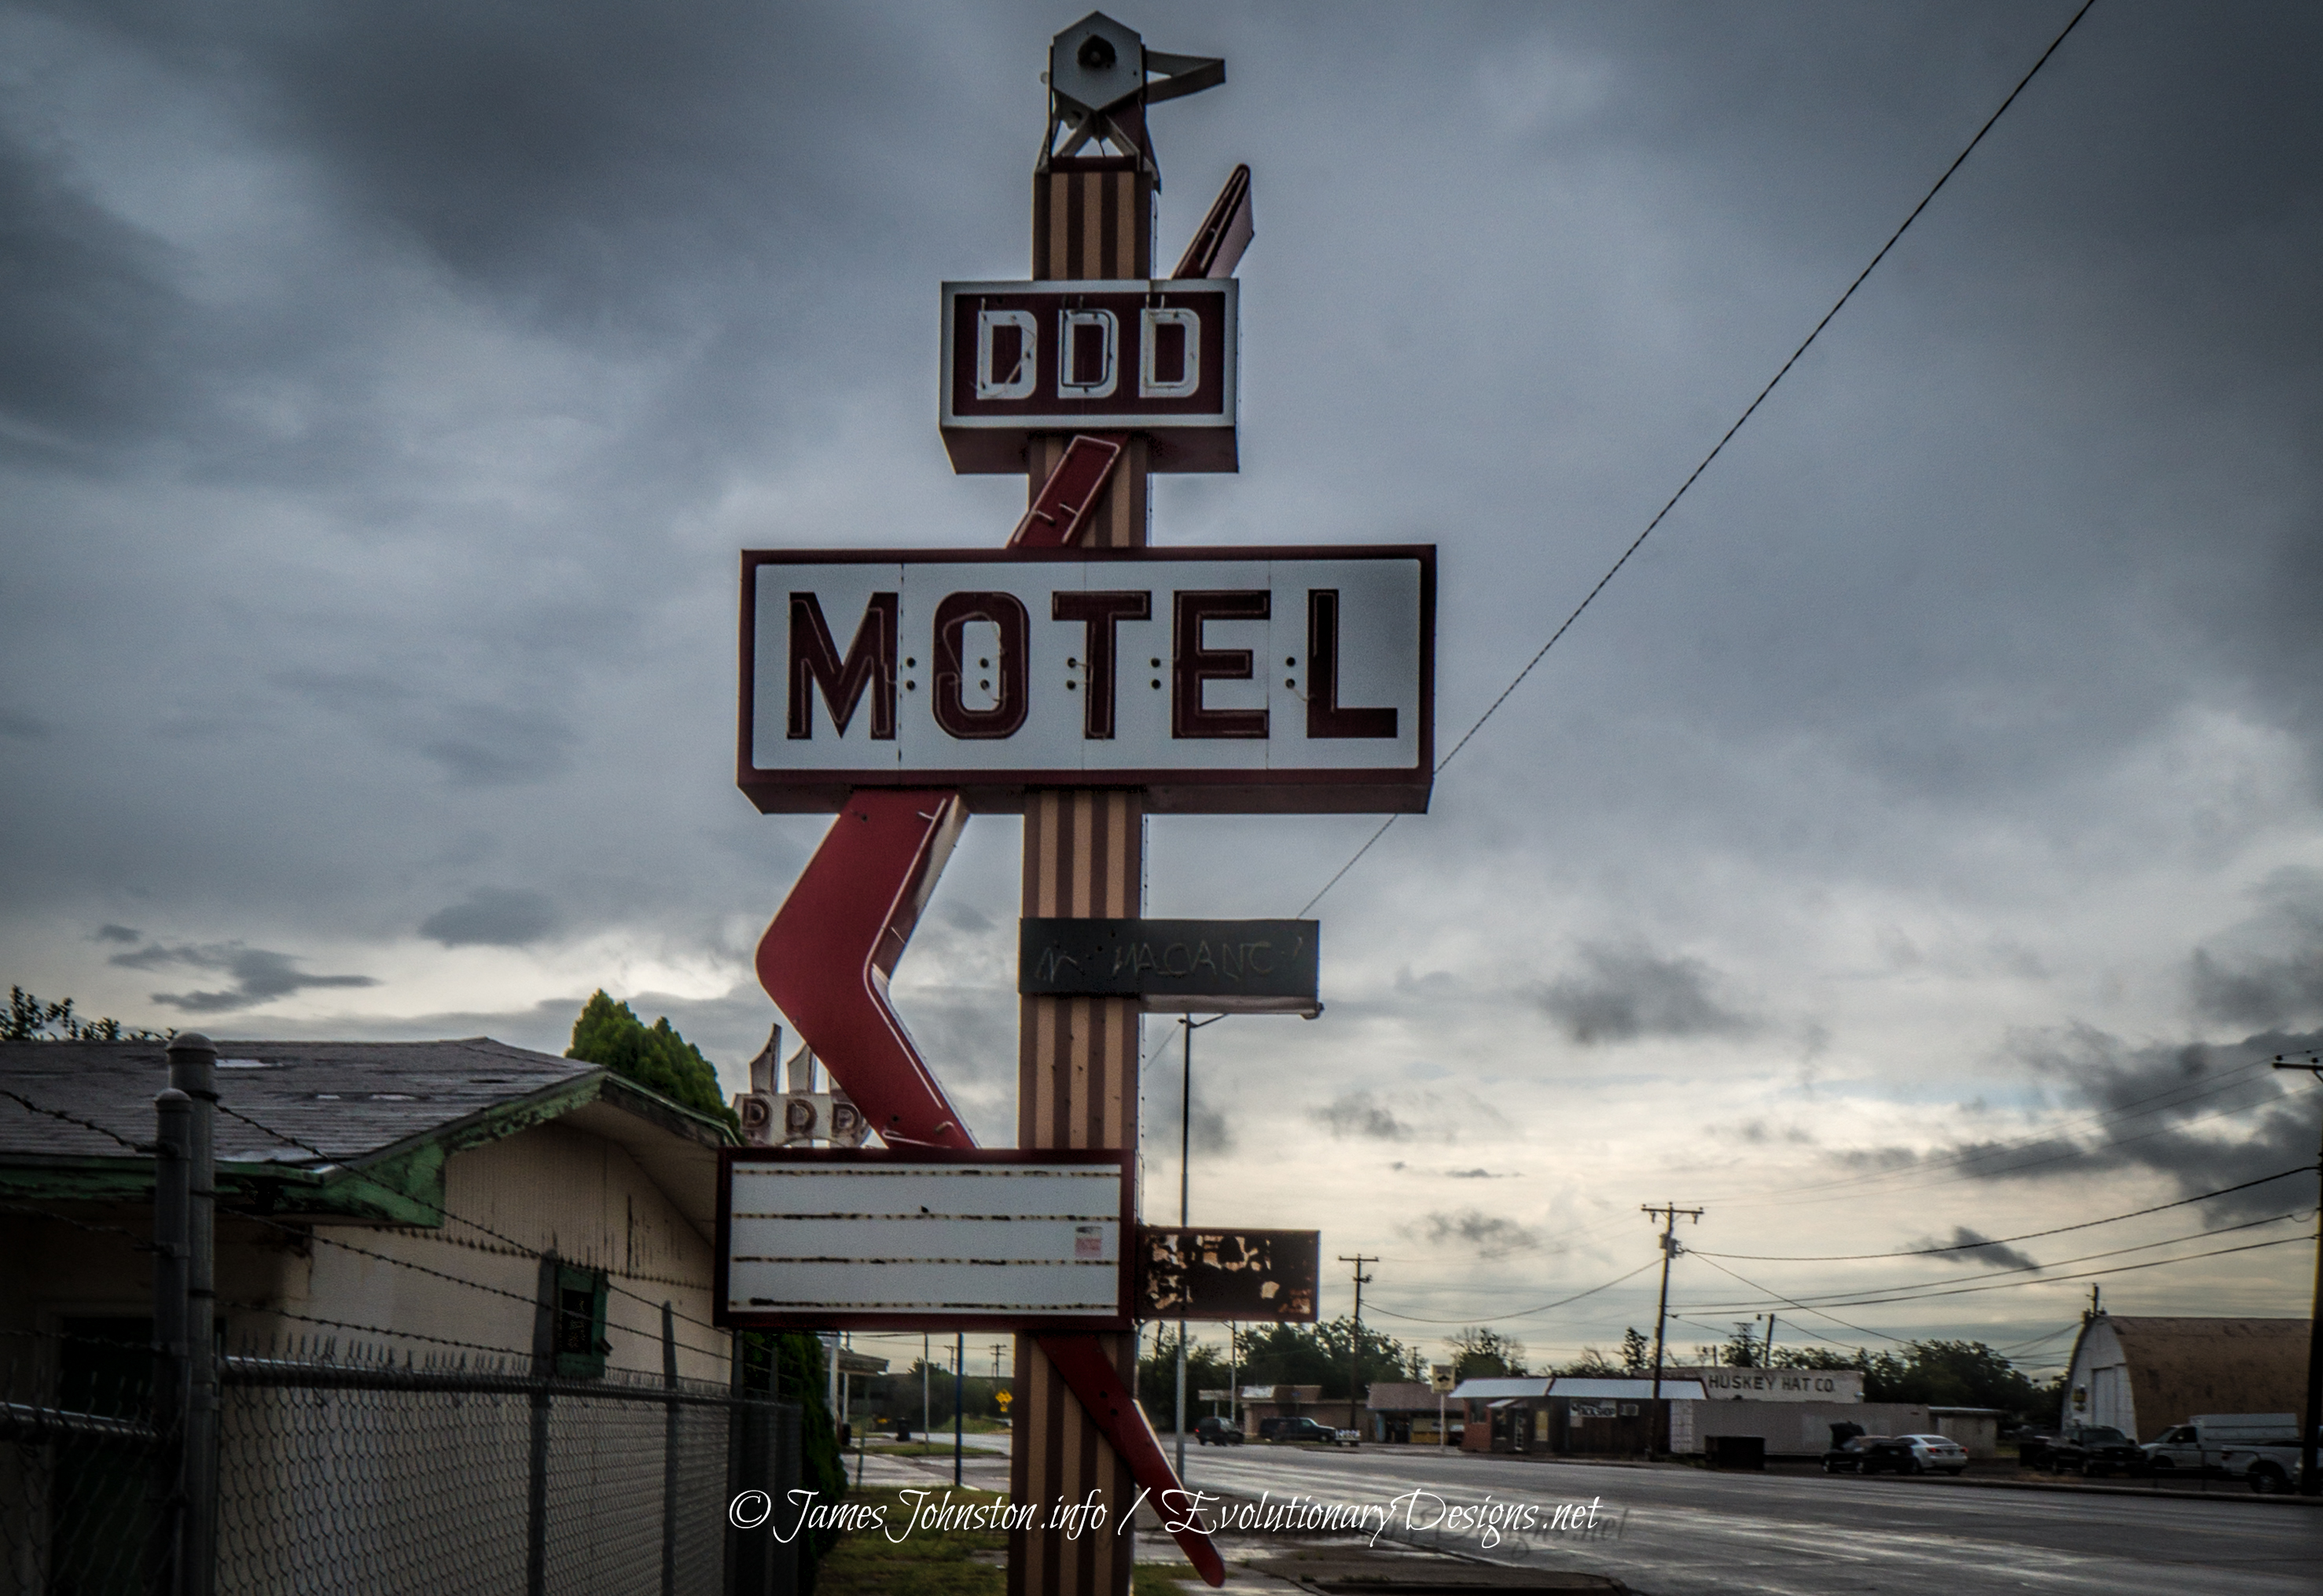 Triple DDD Motel in Wichita Falls, Texas